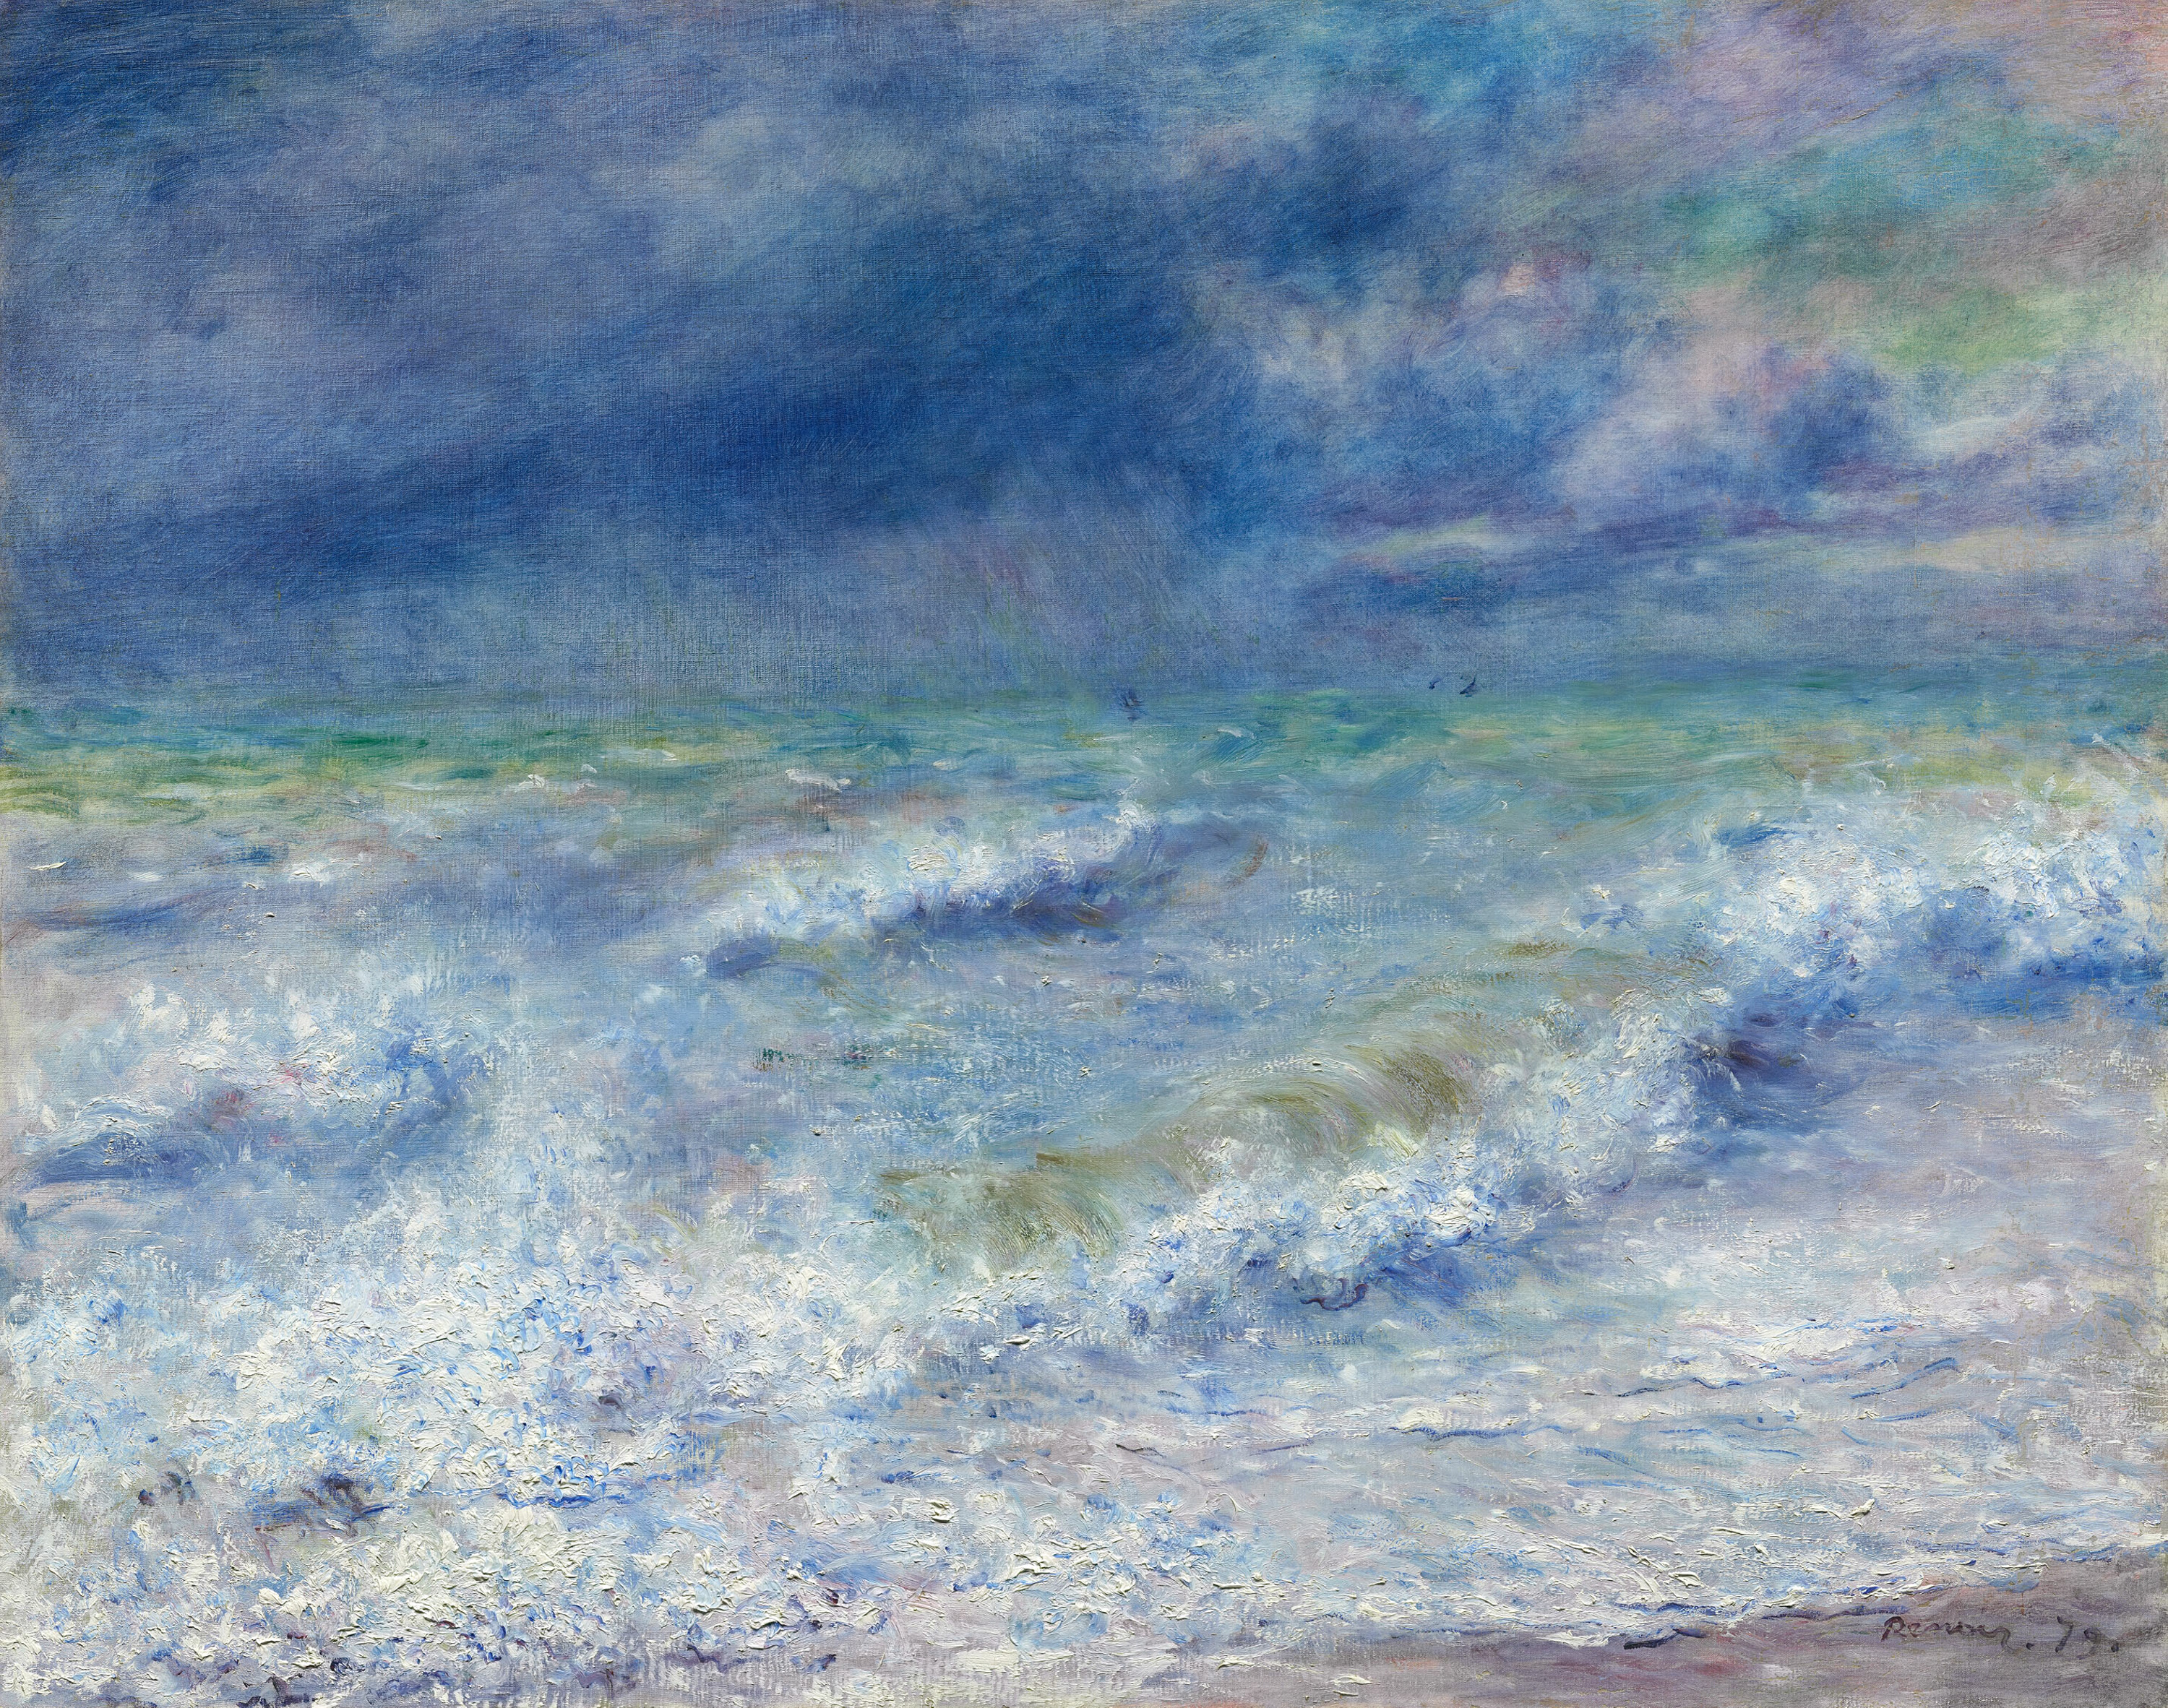 海景 by Pierre-Auguste Renoir - 1879 - 72.6 × 91.6 cm 